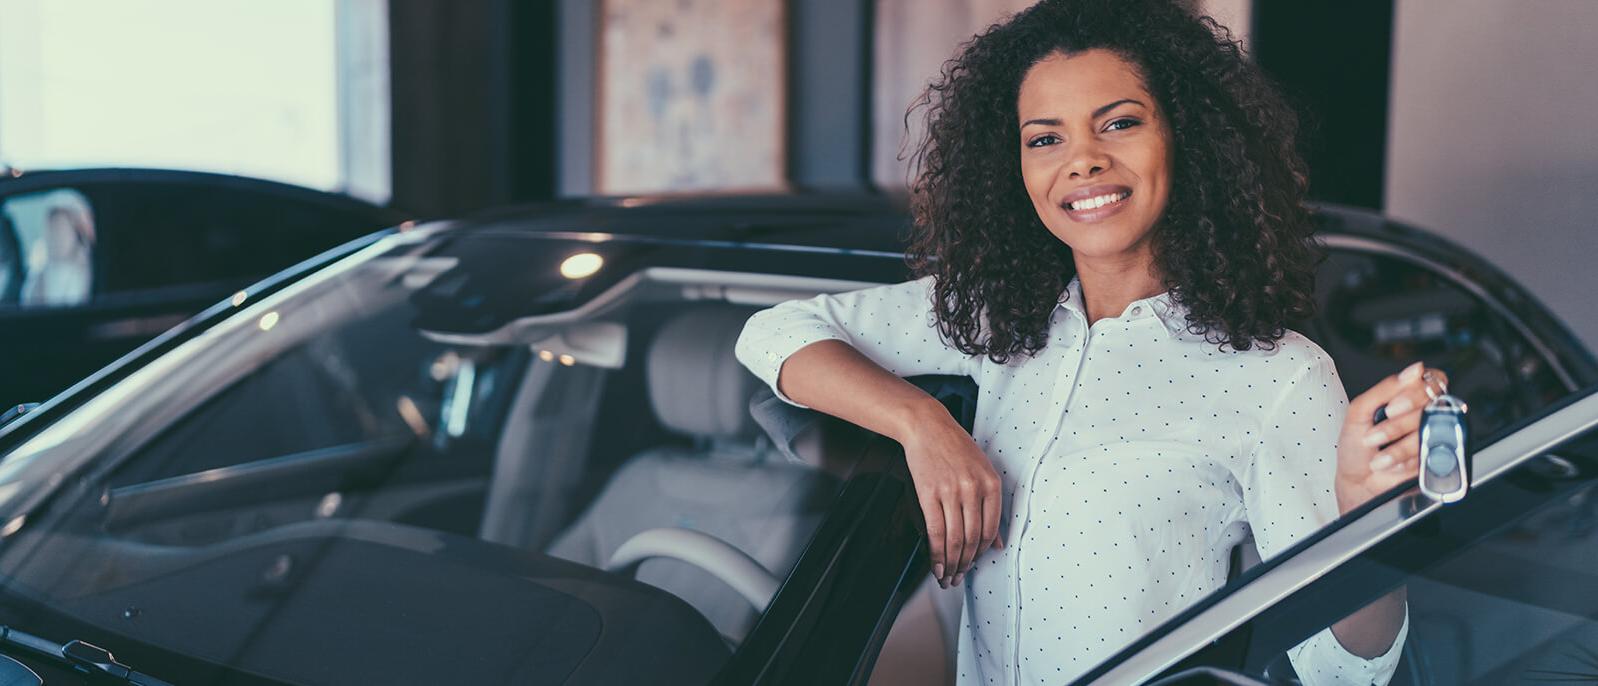 Smiling woman holding new car keys